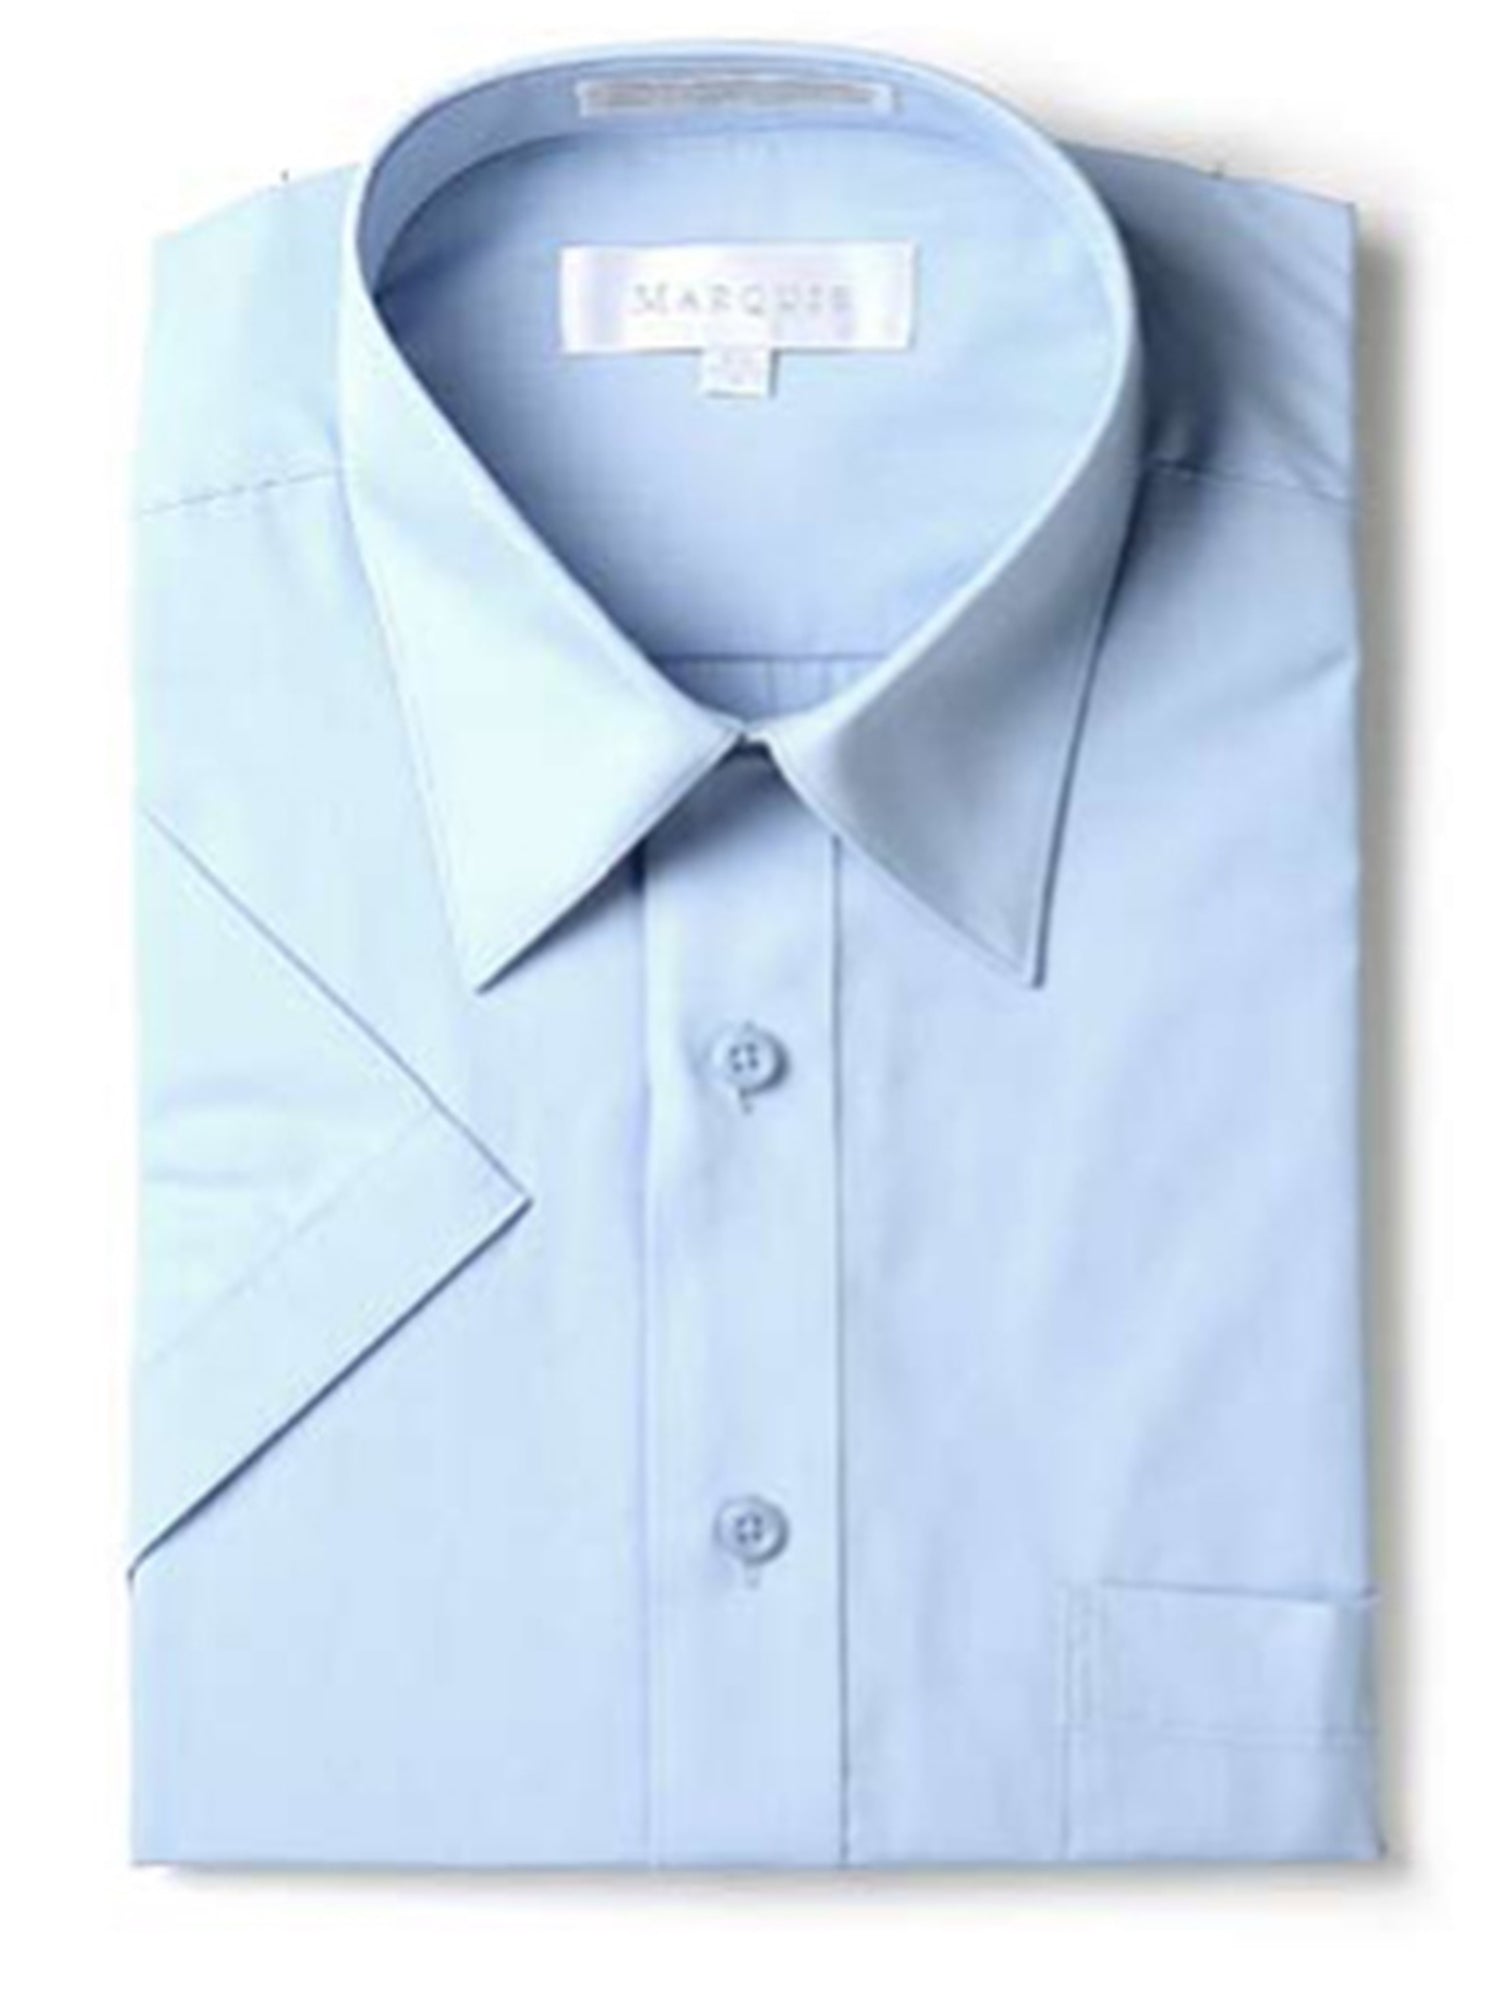 Marquis Men's Short Sleeve Regular Fit Dress Shirt - S To 4XL Men's Dress Shirts Marquis Light Blue Small/14.5 